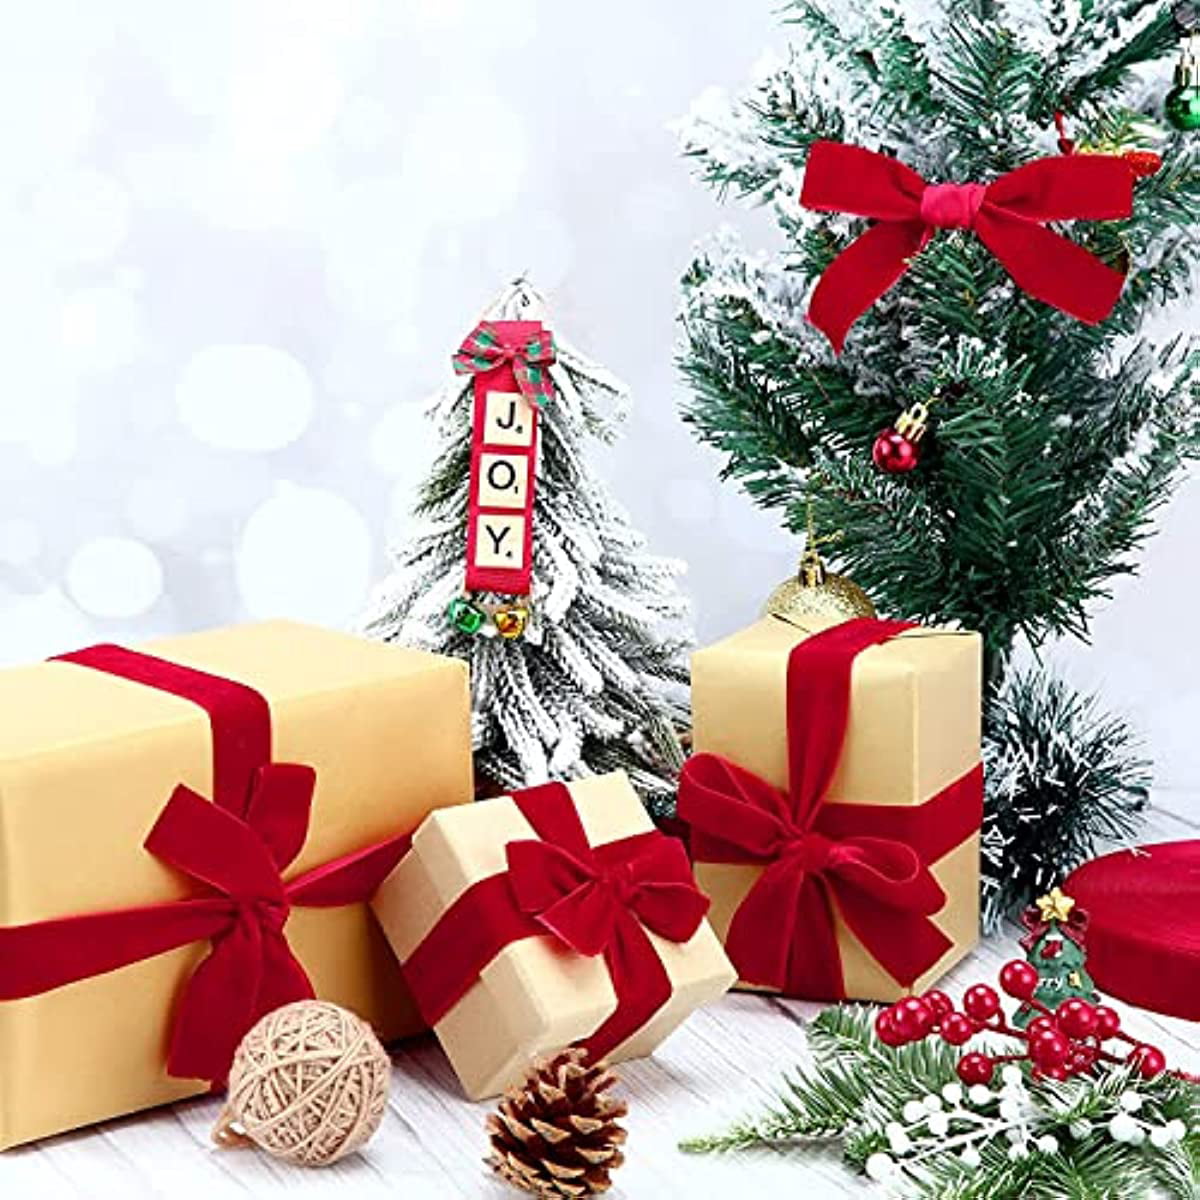  2 Rolls 2.5 Inch 10 Yards Christmas Velvet Ribbon Single Face  Christmas Plain Velvet Ribbon for Gift Wrapping Crafts Christmas Wreath  Tree Decor (White)